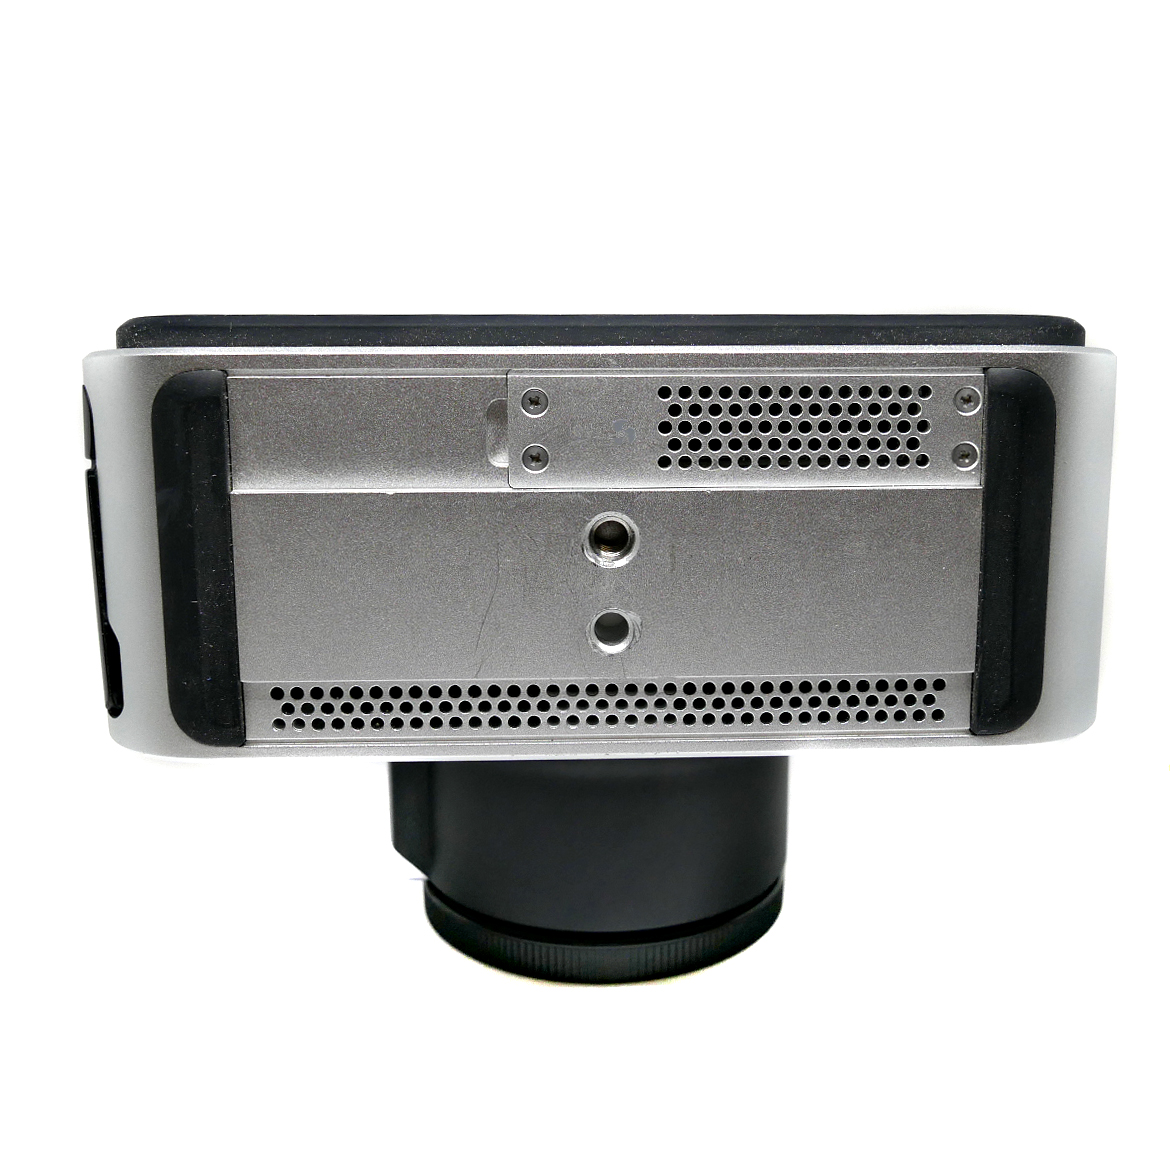 (Myyty) Blacmagic Production 4K -kamera (Käytetty)